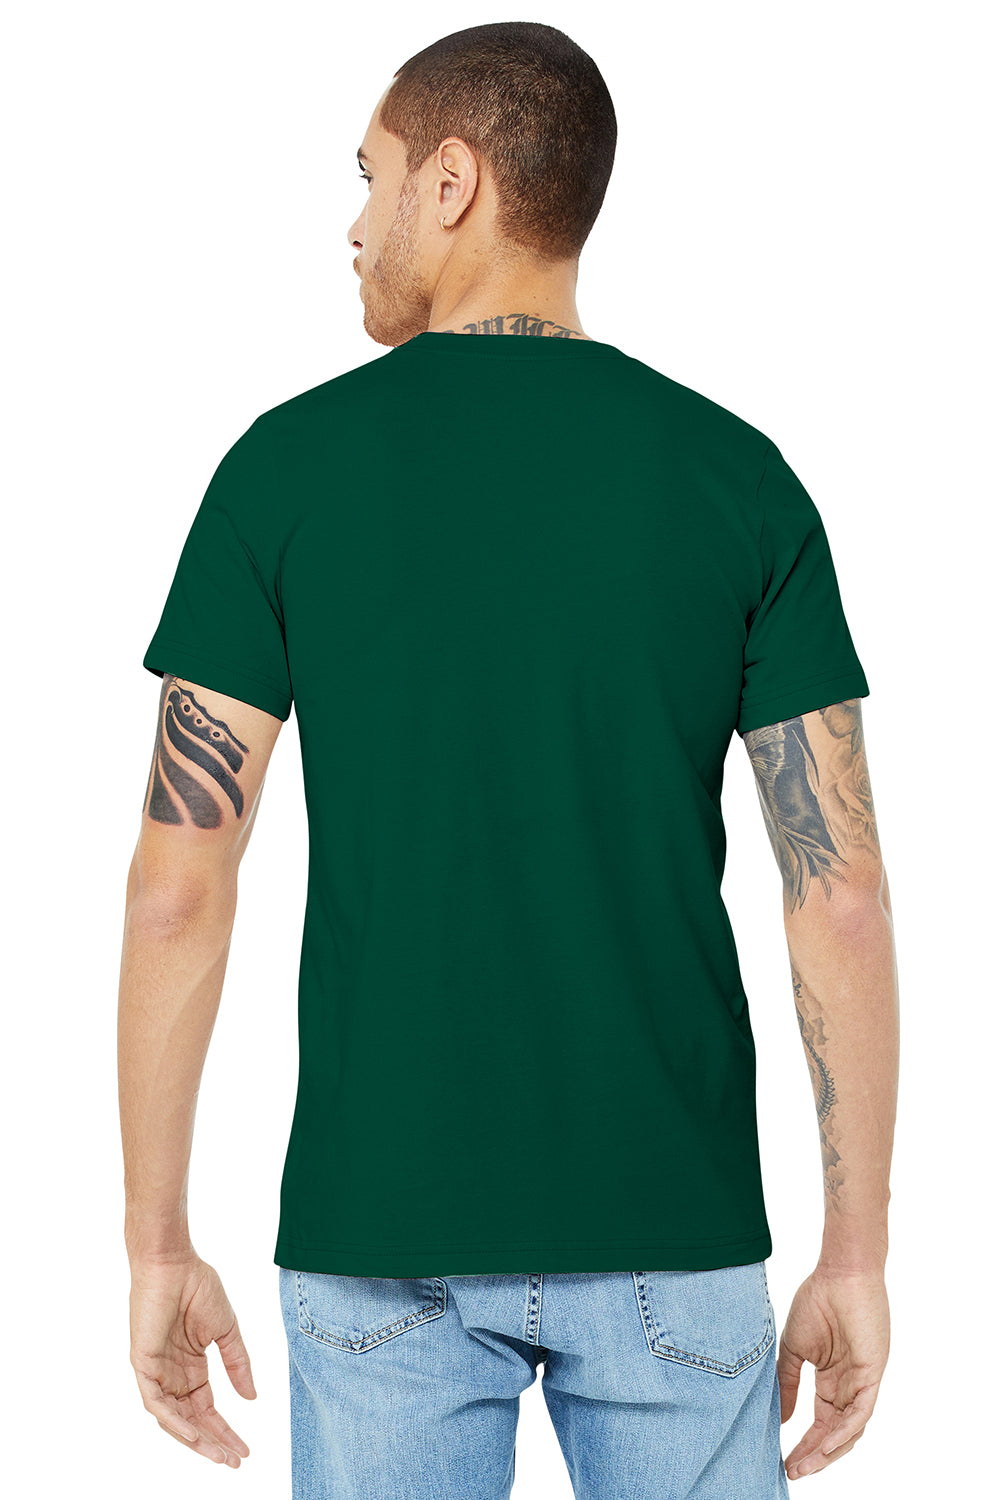 Bella + Canvas BC3001/3001C Mens Jersey Short Sleeve Crewneck T-Shirt Evergreen Model Back